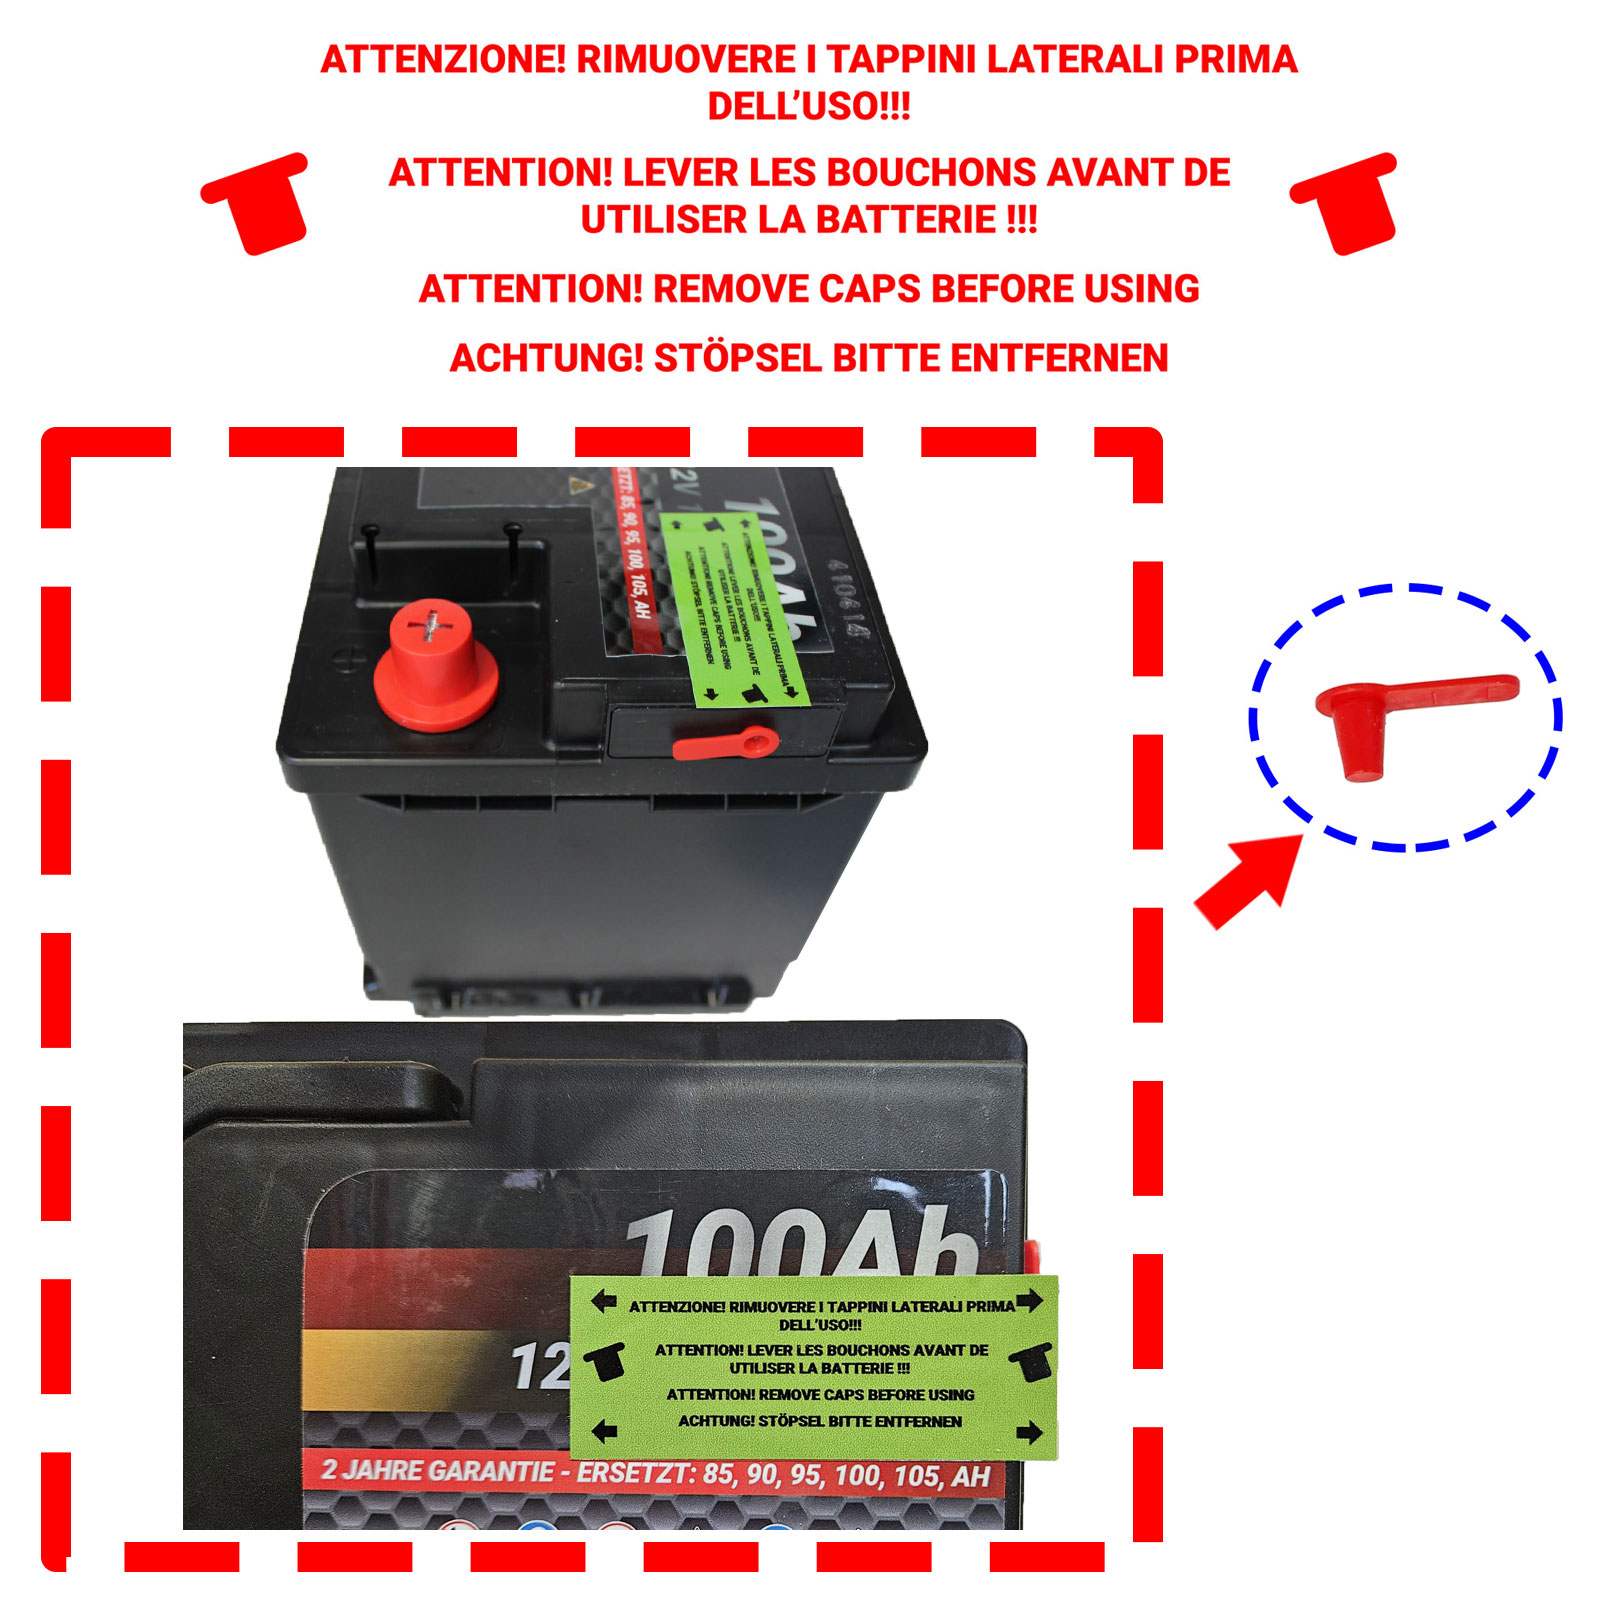 2800012001280 Continental Start-Stop Batterie 12V 70Ah 650A B13 L3